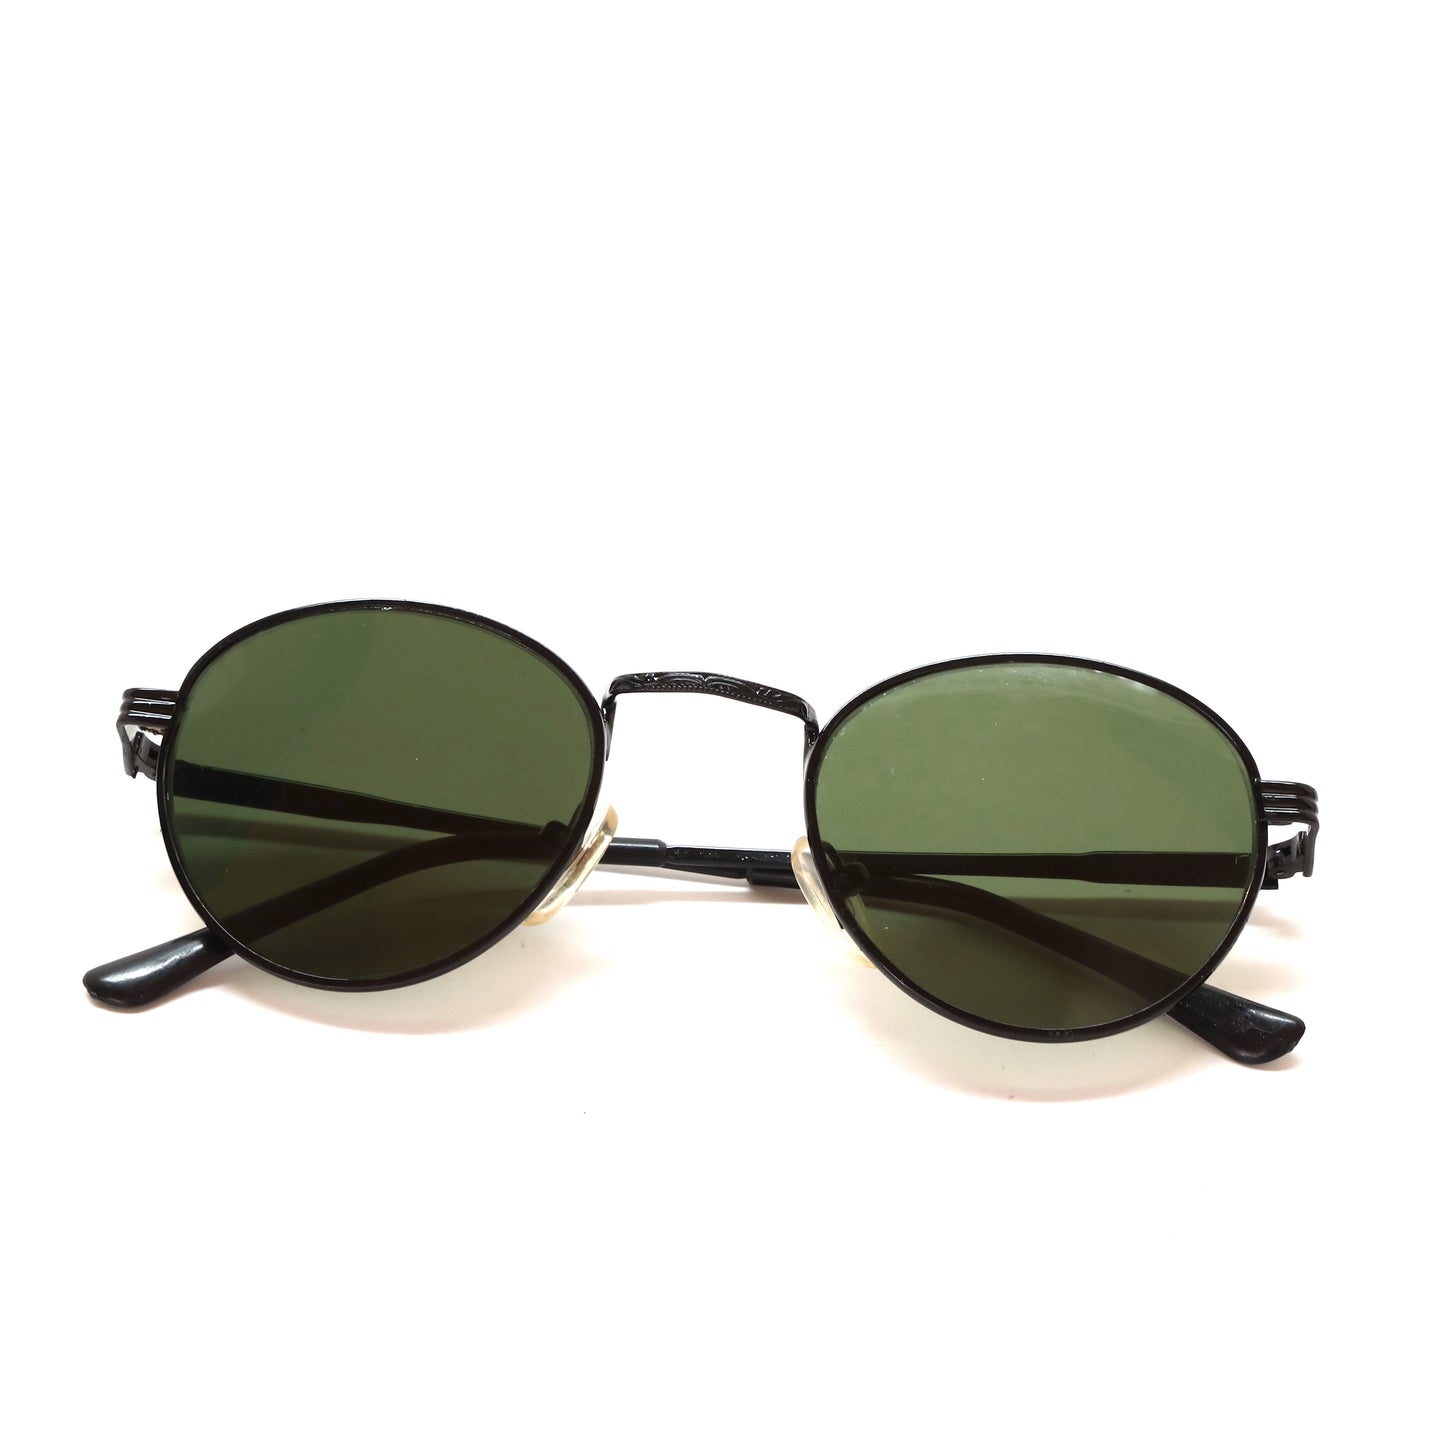 Vintage Standard Size Classic Circular Frame Deadstock Sunglasses - Black